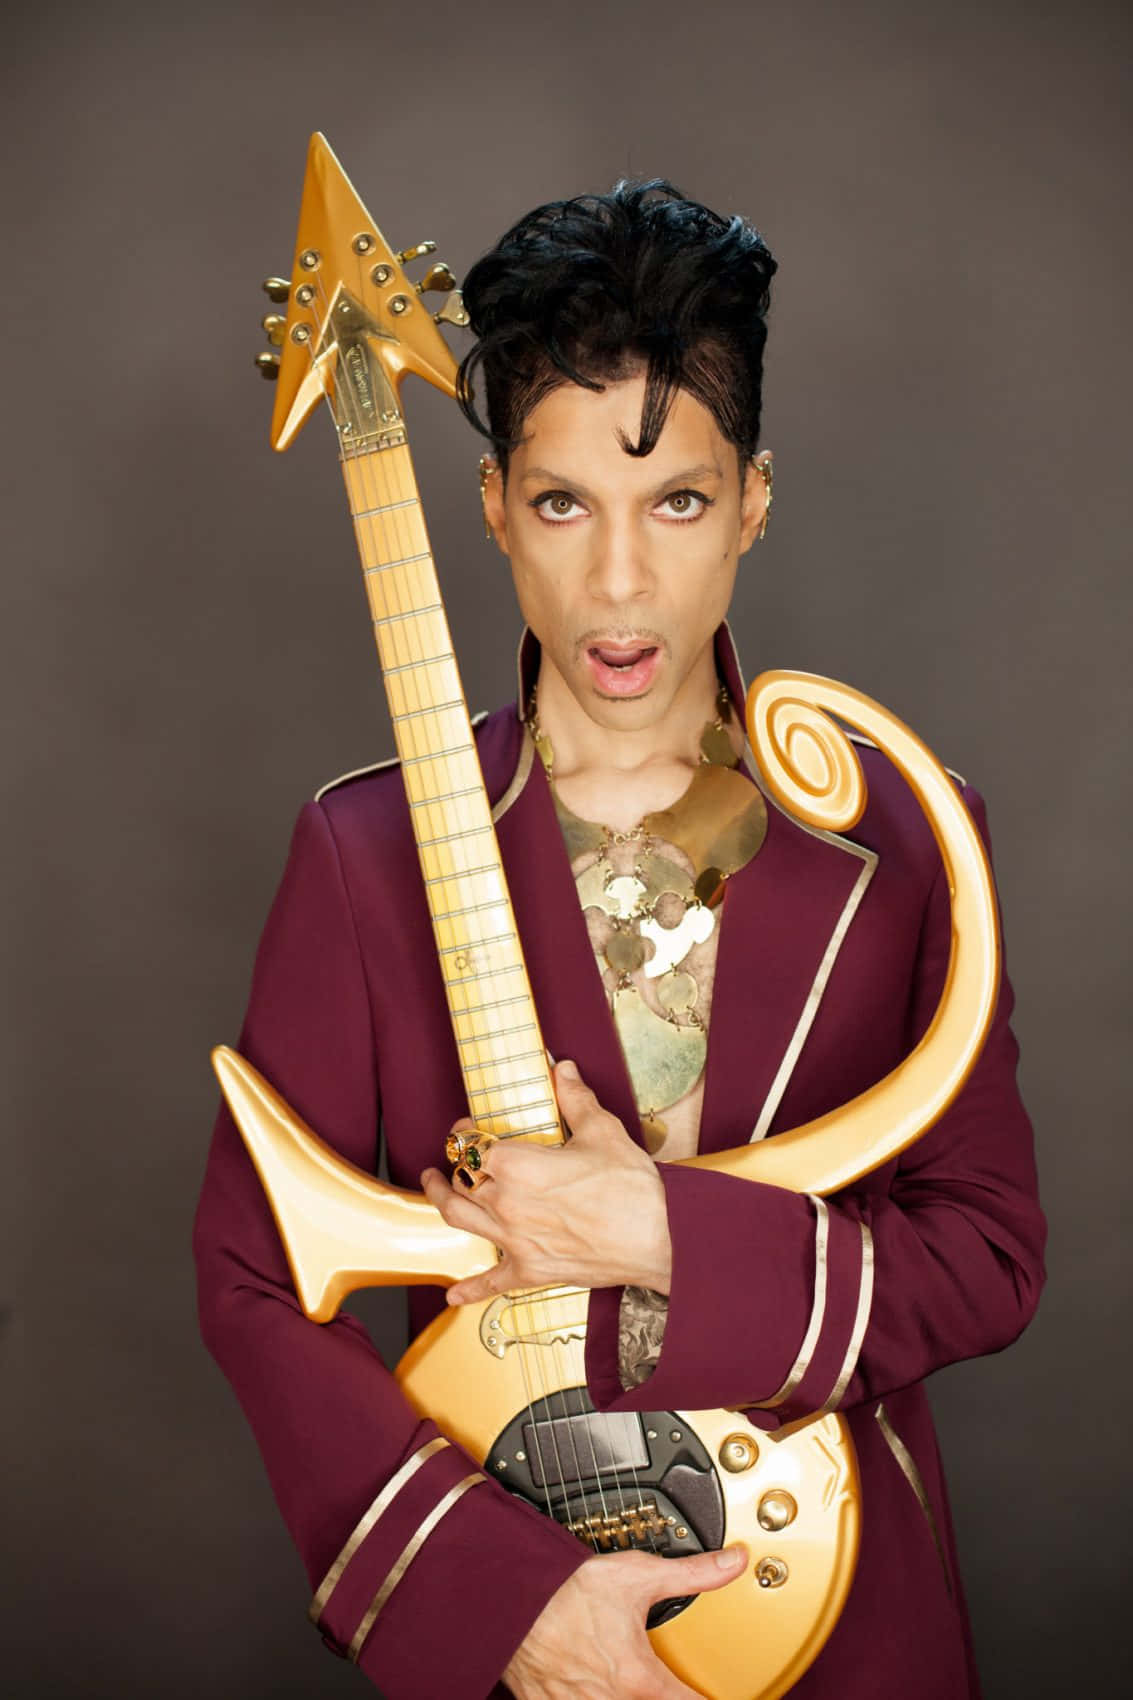 The Legendary Artist: Prince